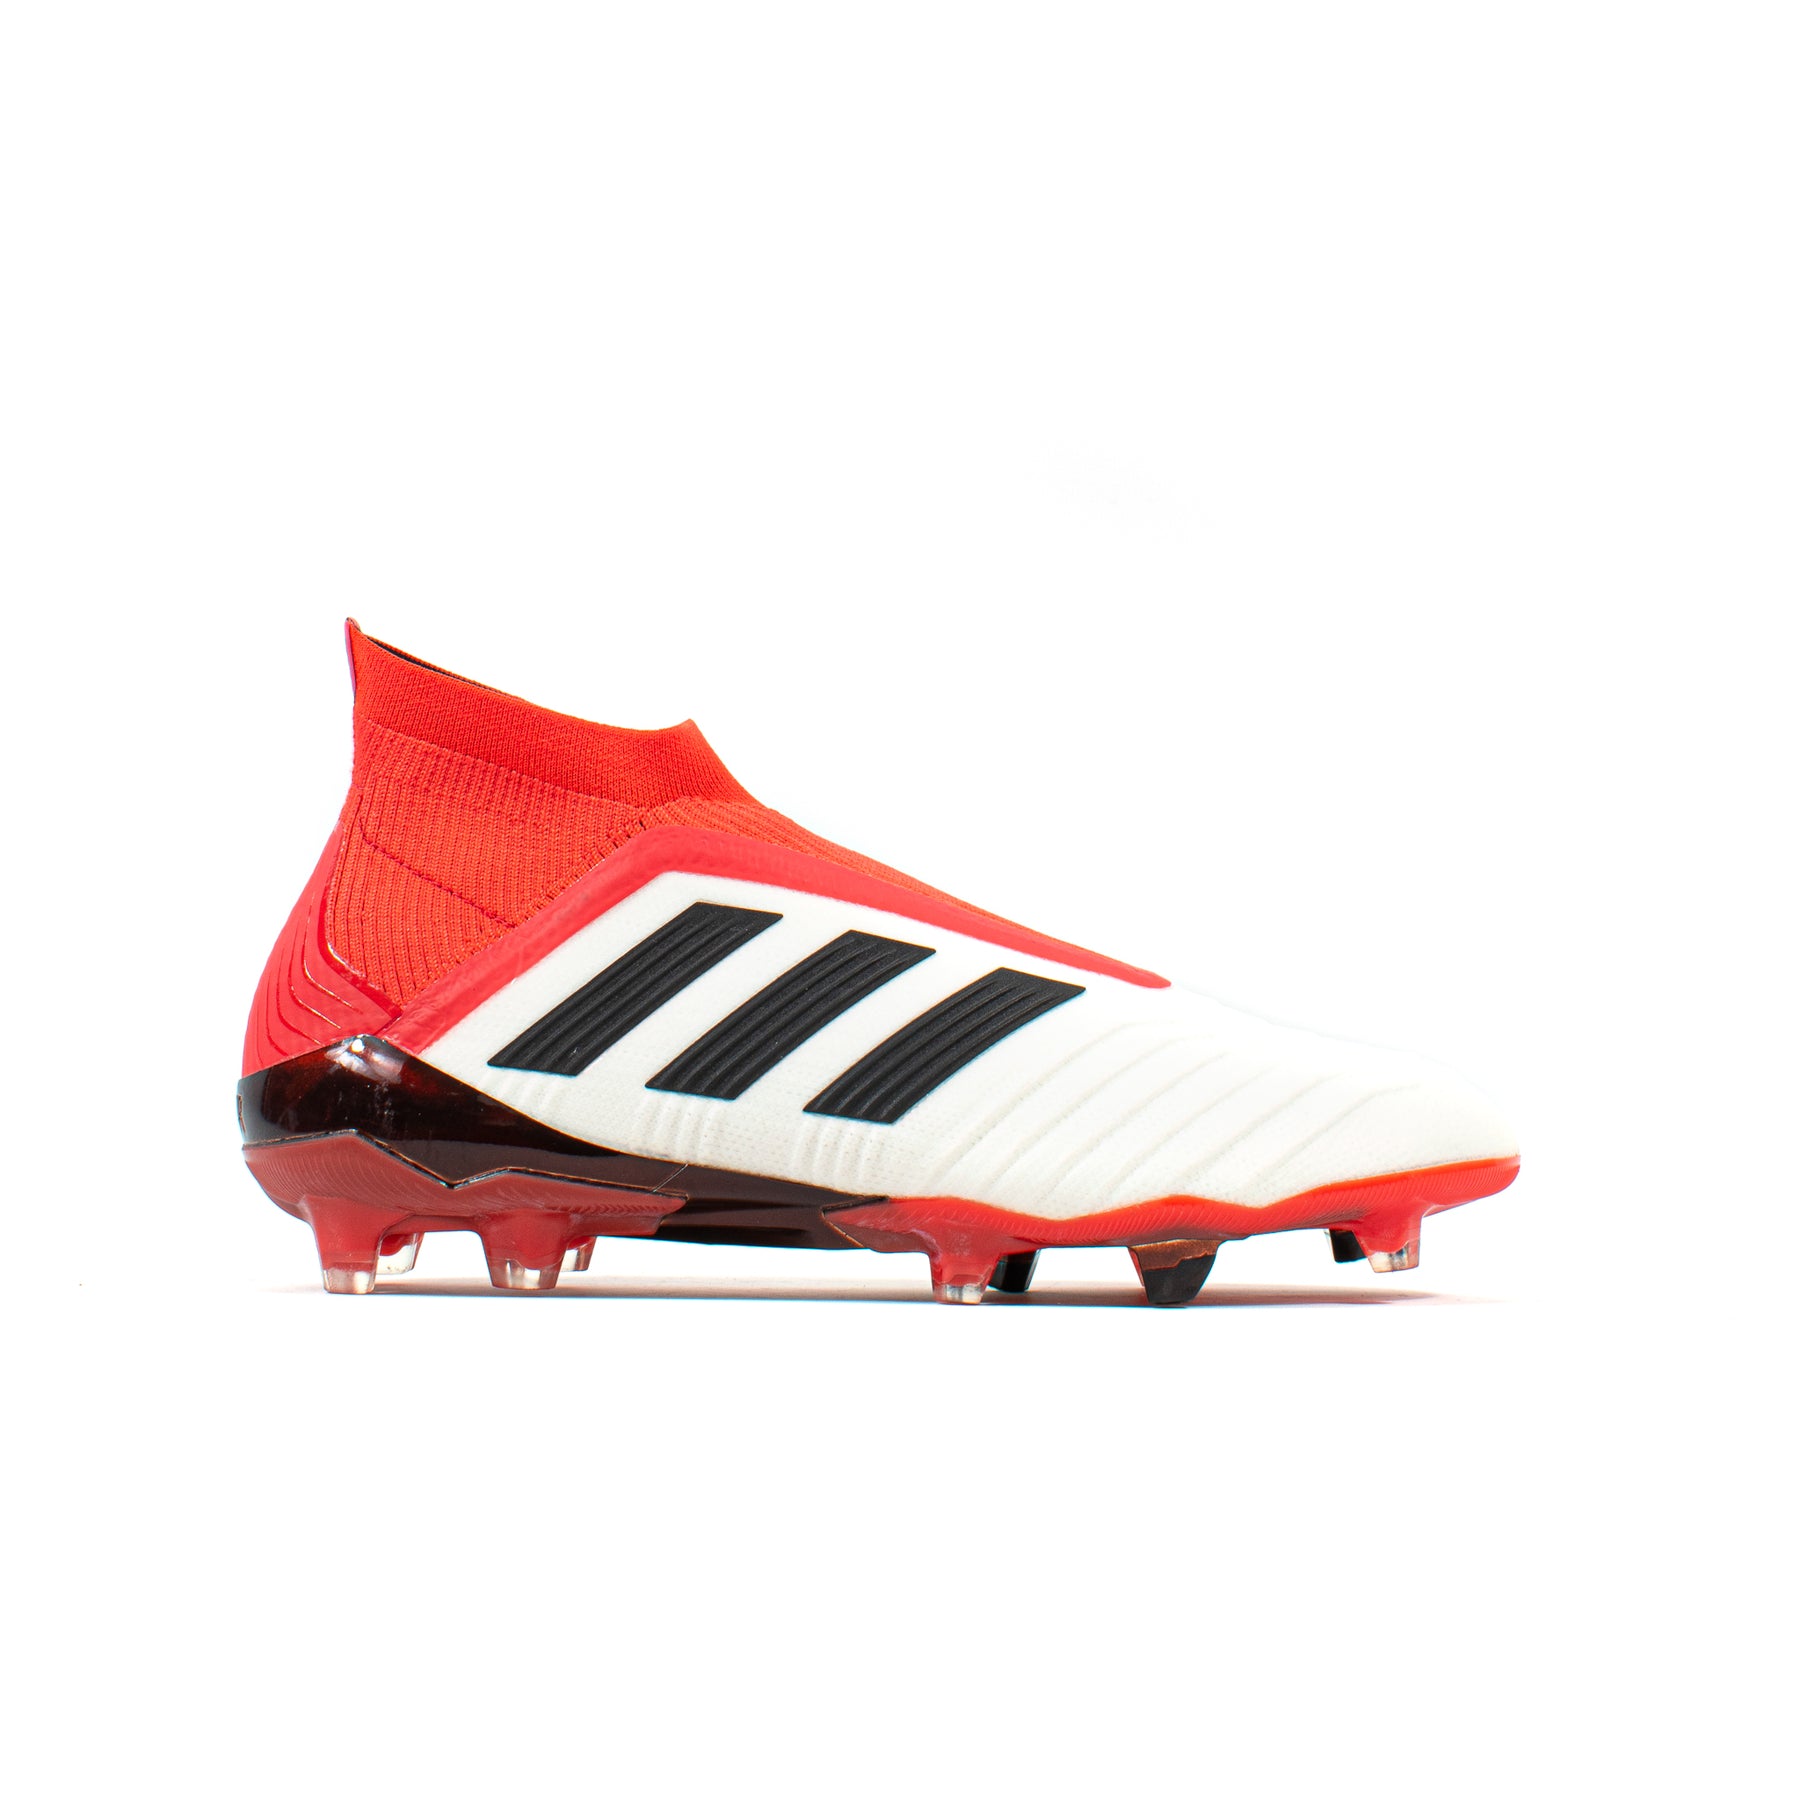 Adidas Predator 18+ White Red FG – Soccer Cleats